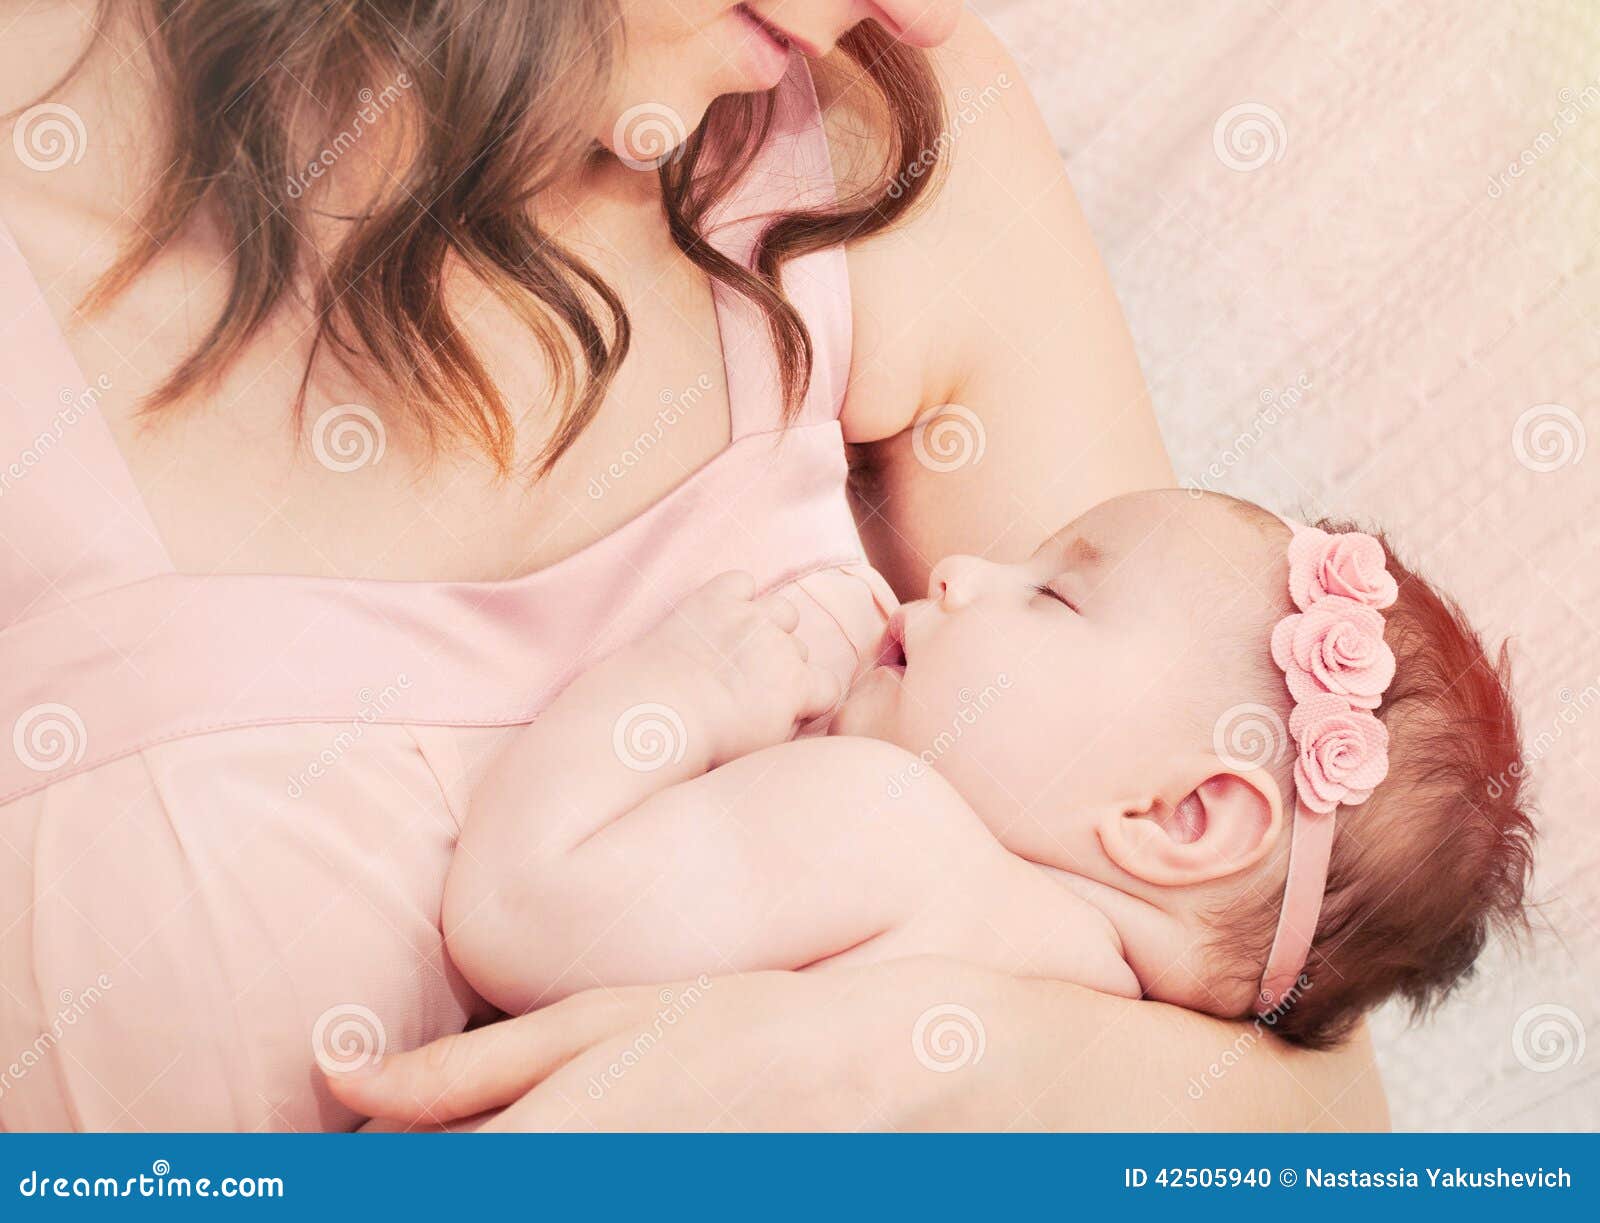 77,887 Cute Sleeping Baby Stock Photos - Free & Royalty-Free Stock ...